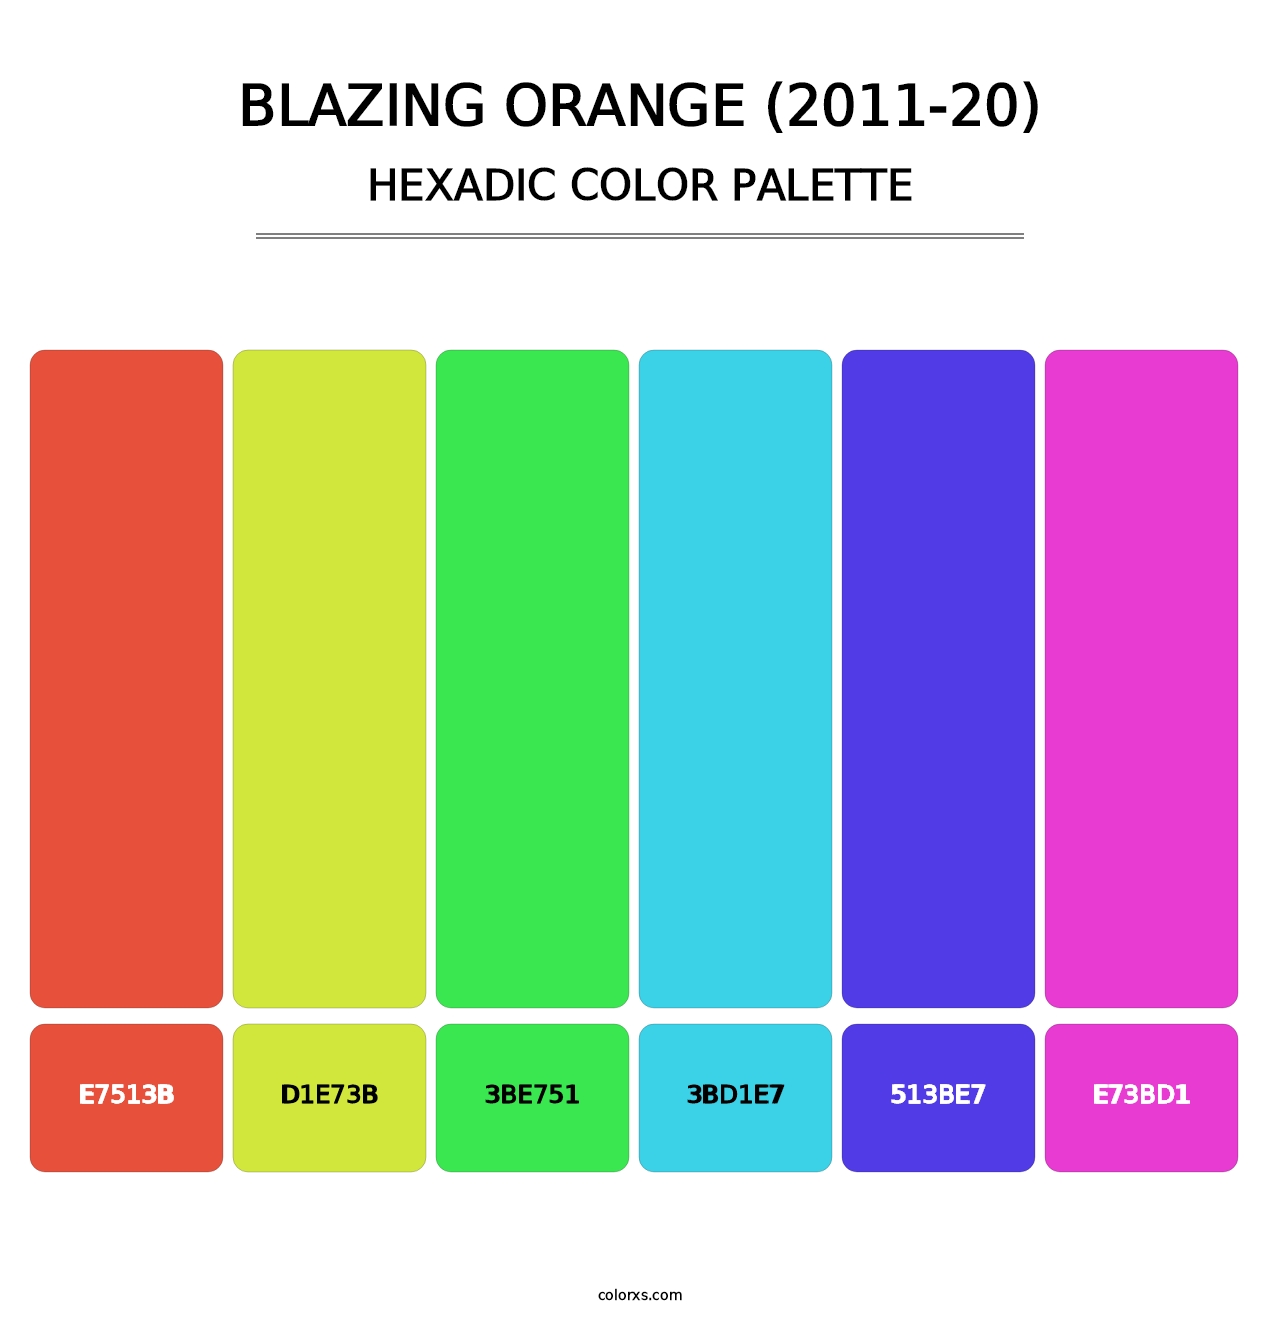 Blazing Orange (2011-20) - Hexadic Color Palette